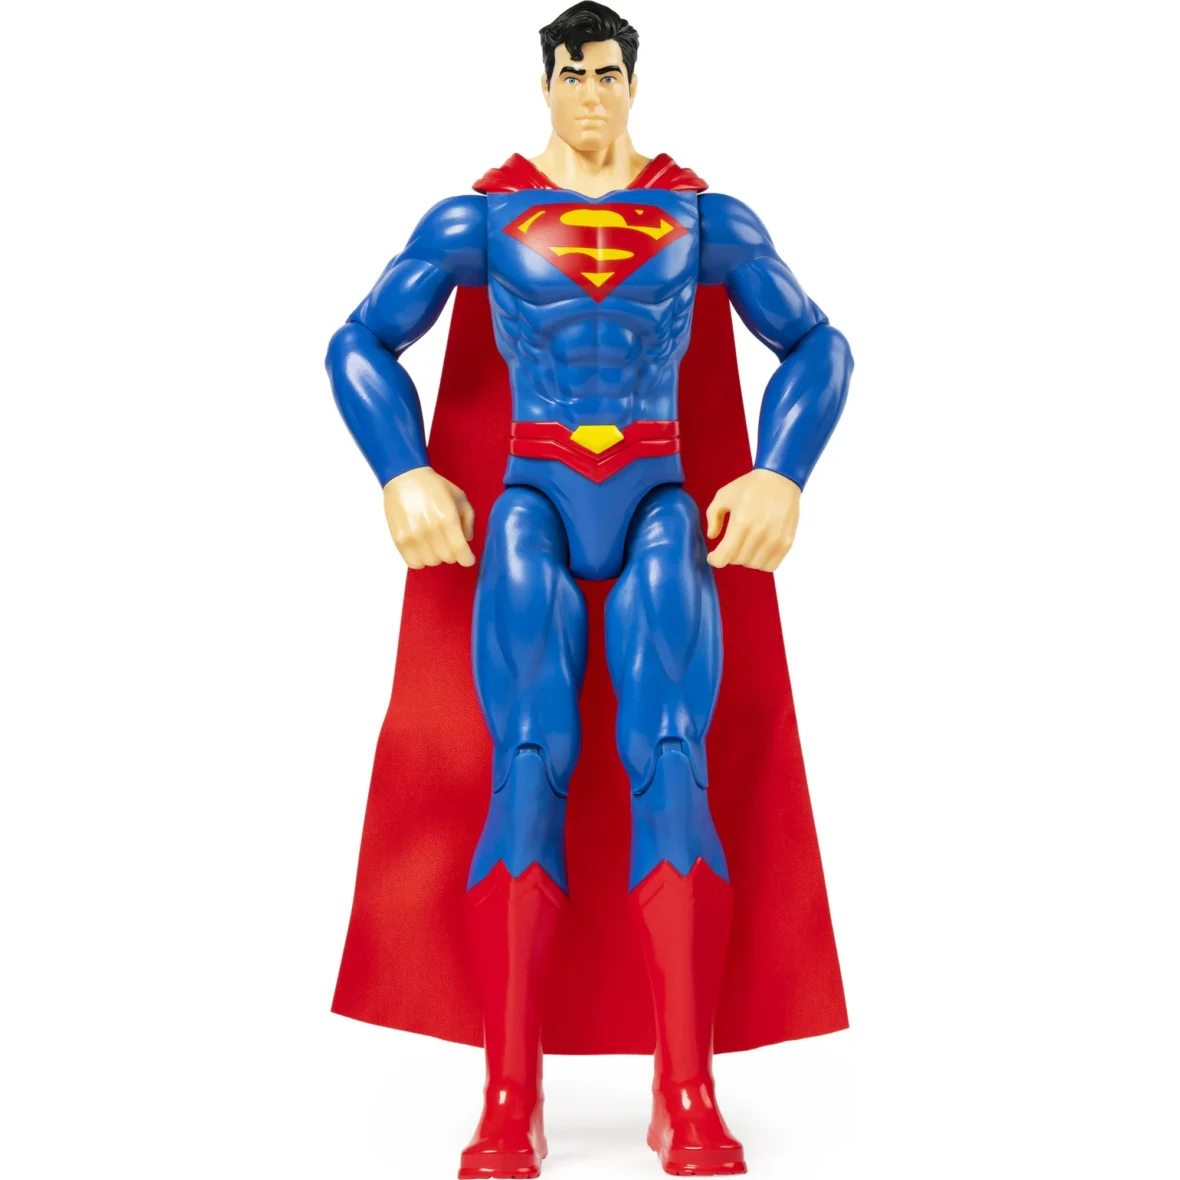 DC Comics, 12-Inch SUPERMAN Action Figure, Kids Toys for Boys